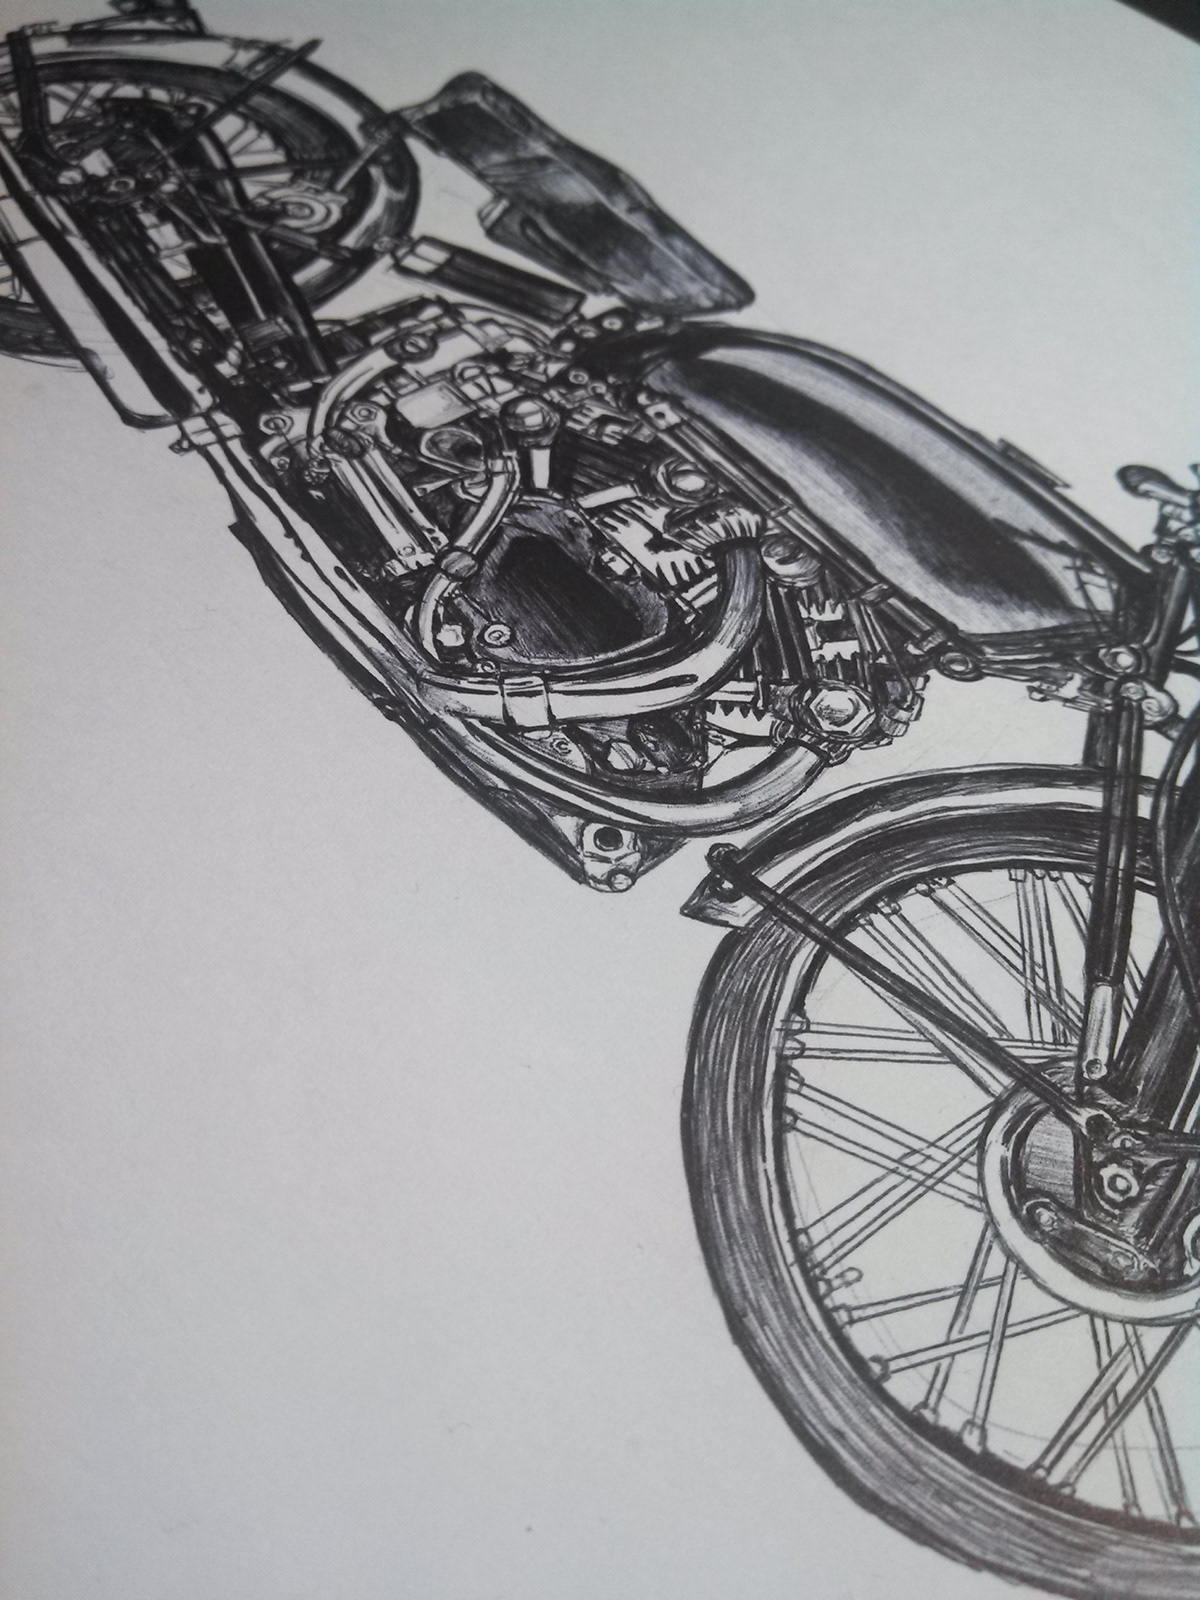 vincent black shadow motorcycle 40s ballpen dibujo pluma monterrey mexico reynosa df Guadalajara ink tattoo